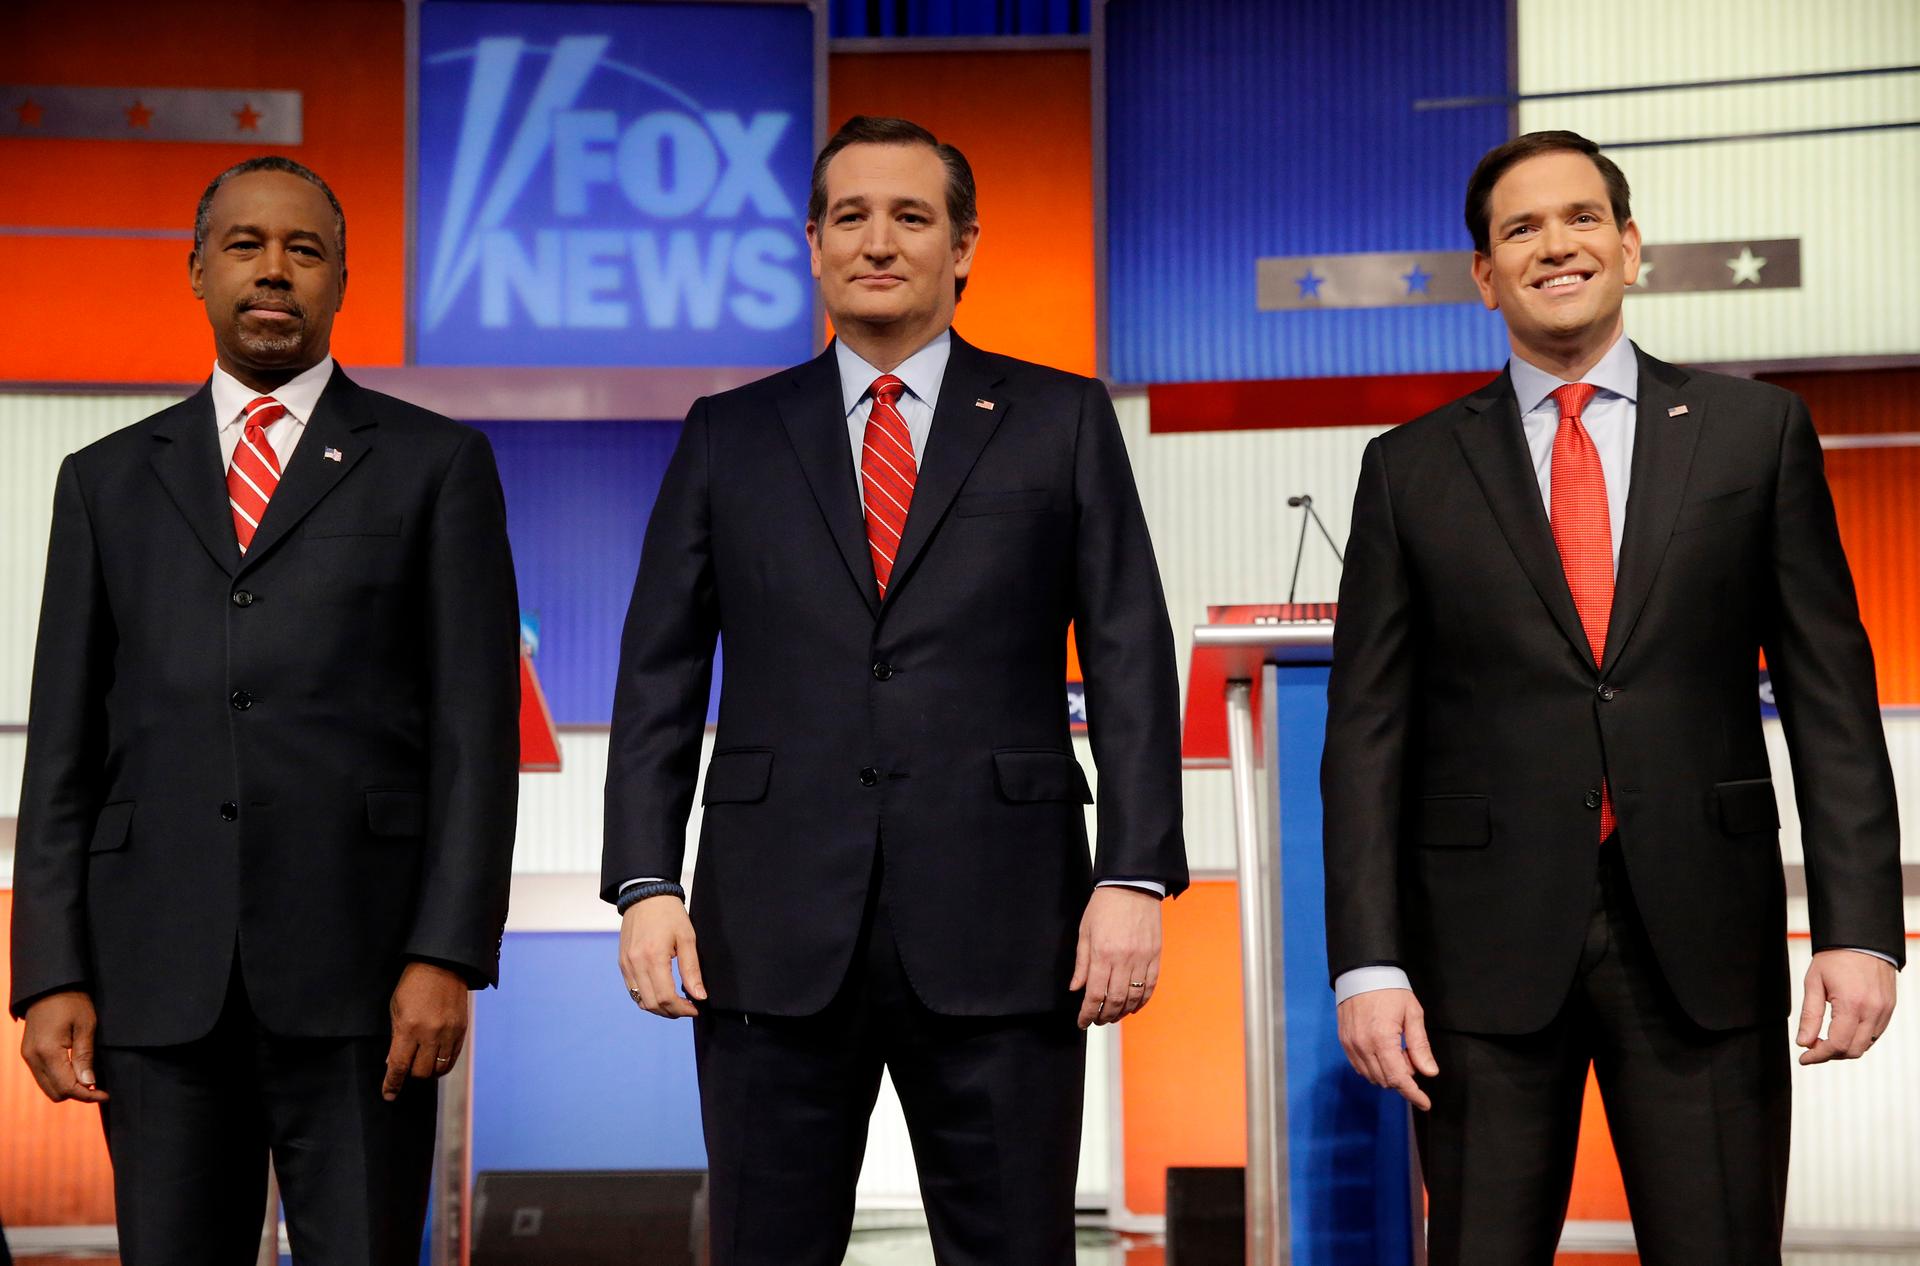 Top Republican candidates at the Iowa presidential debate